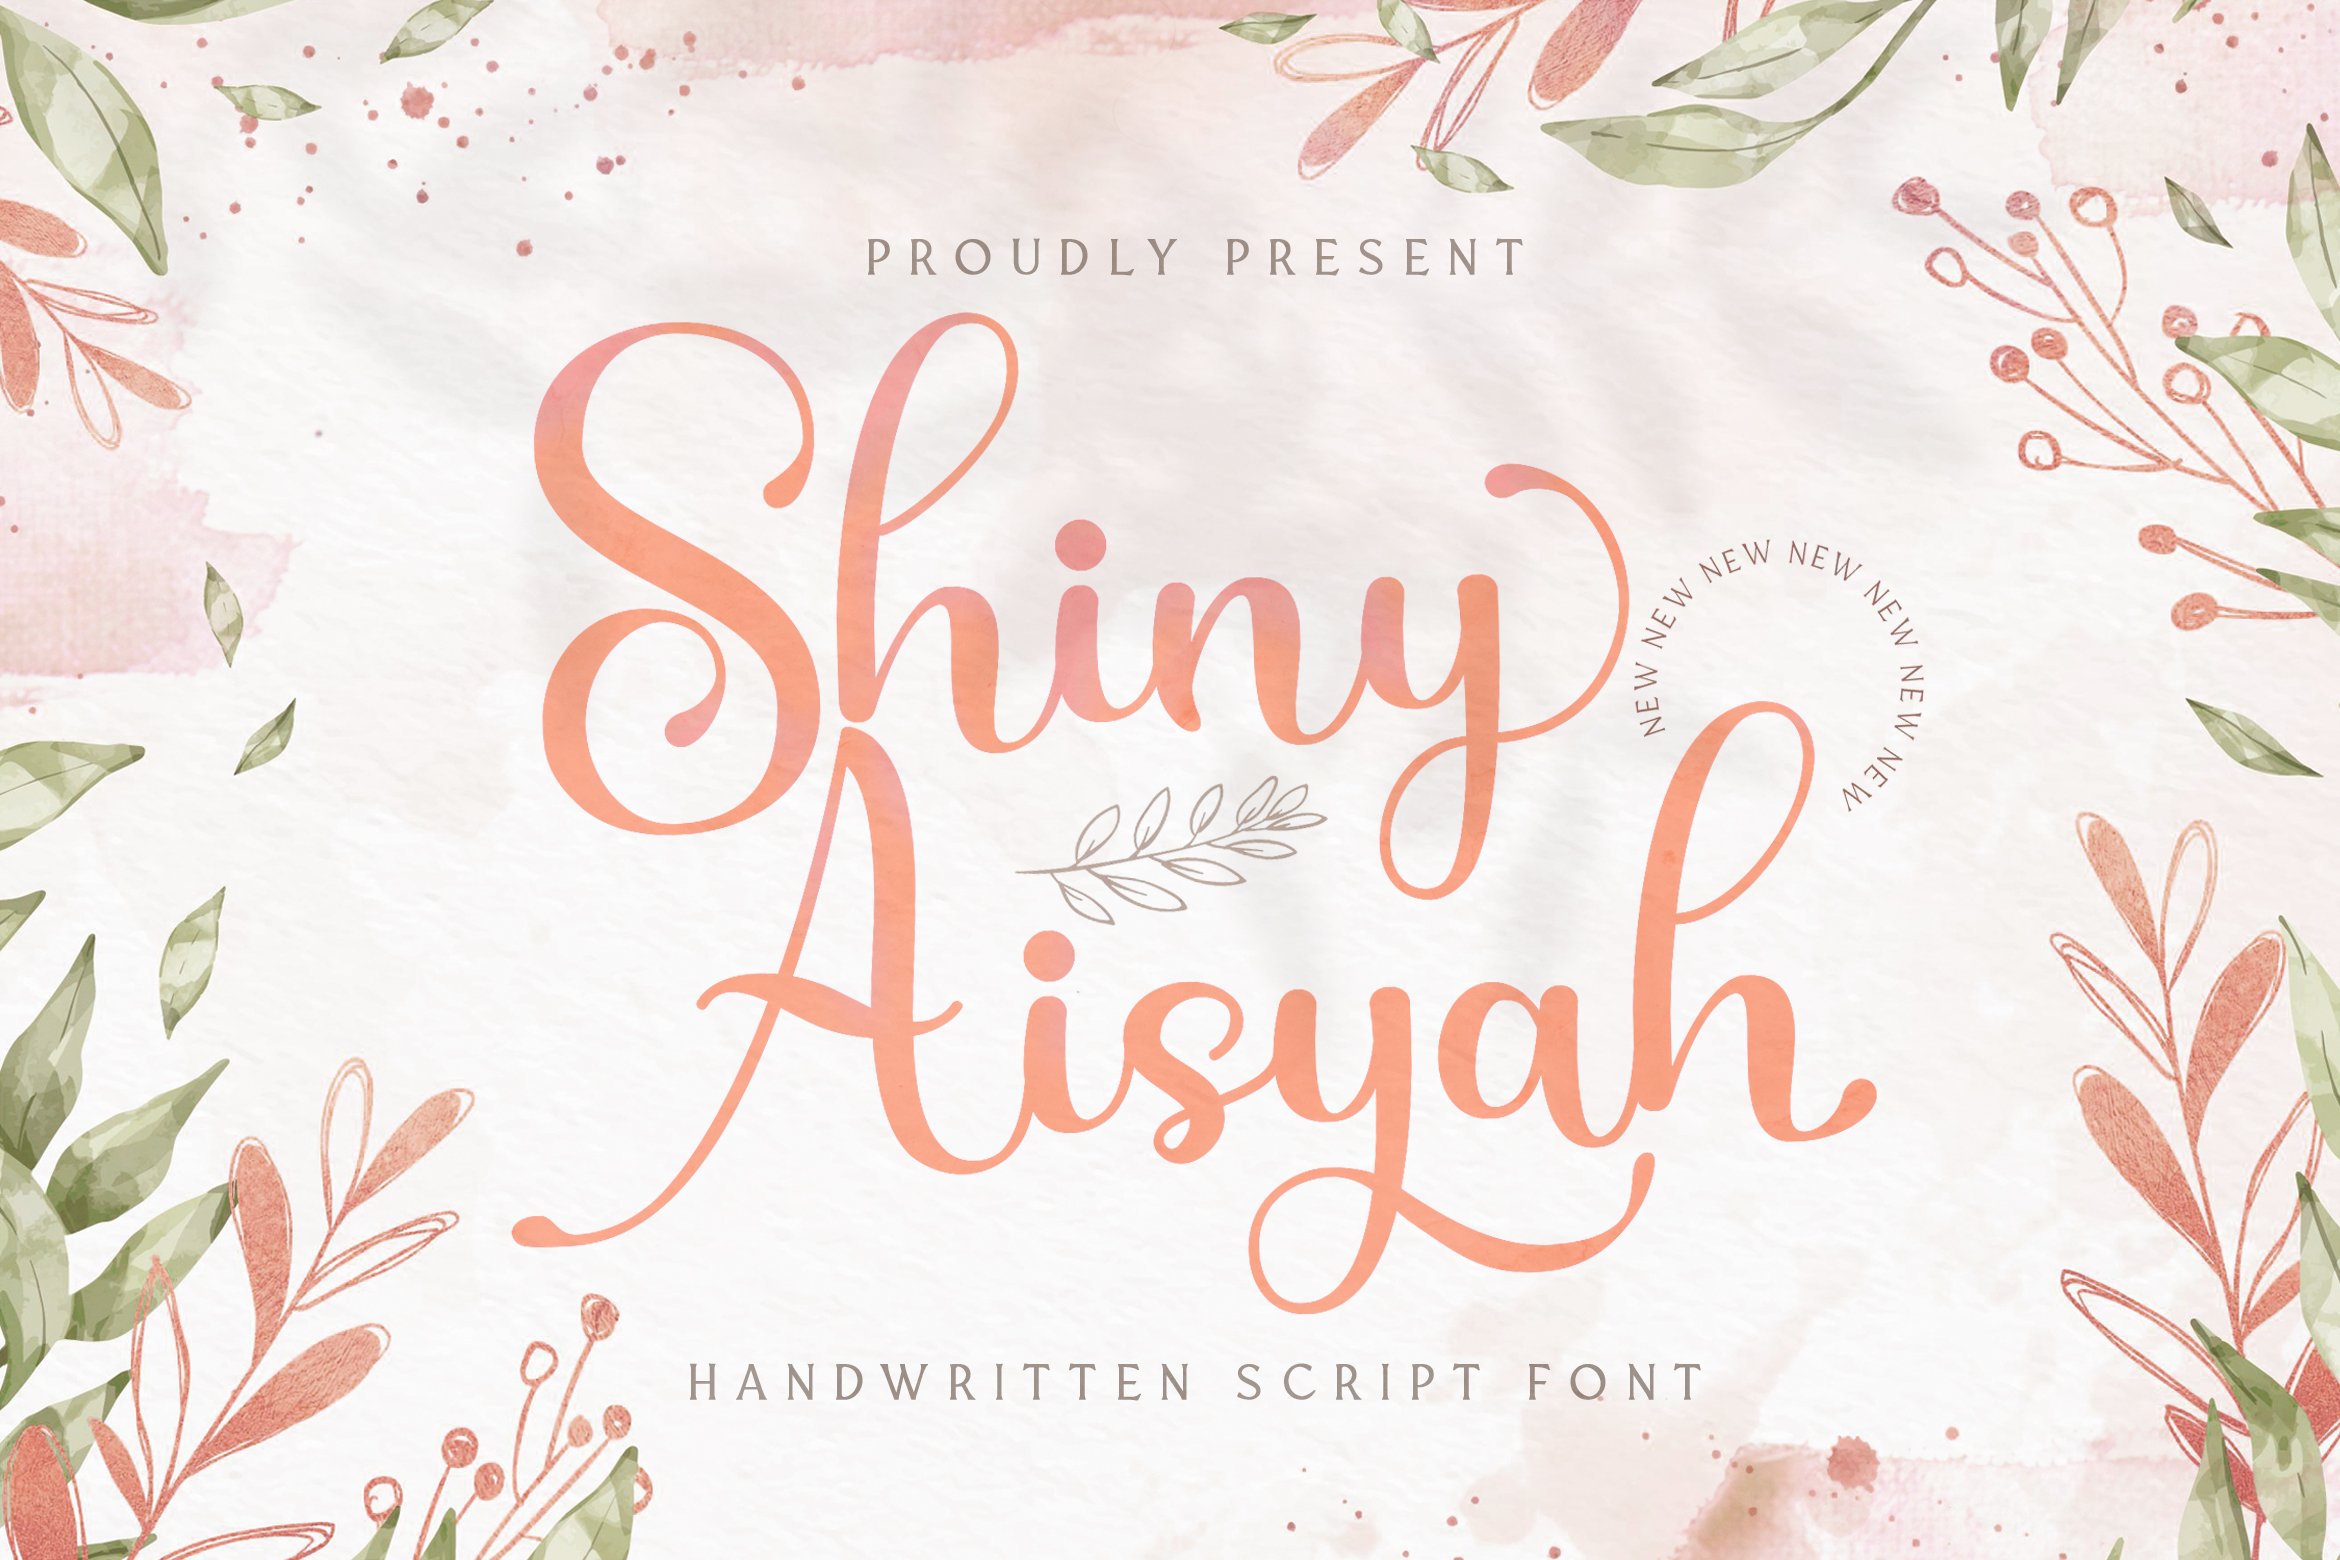 Shiny Aisyah - Handwritten Font cover image.